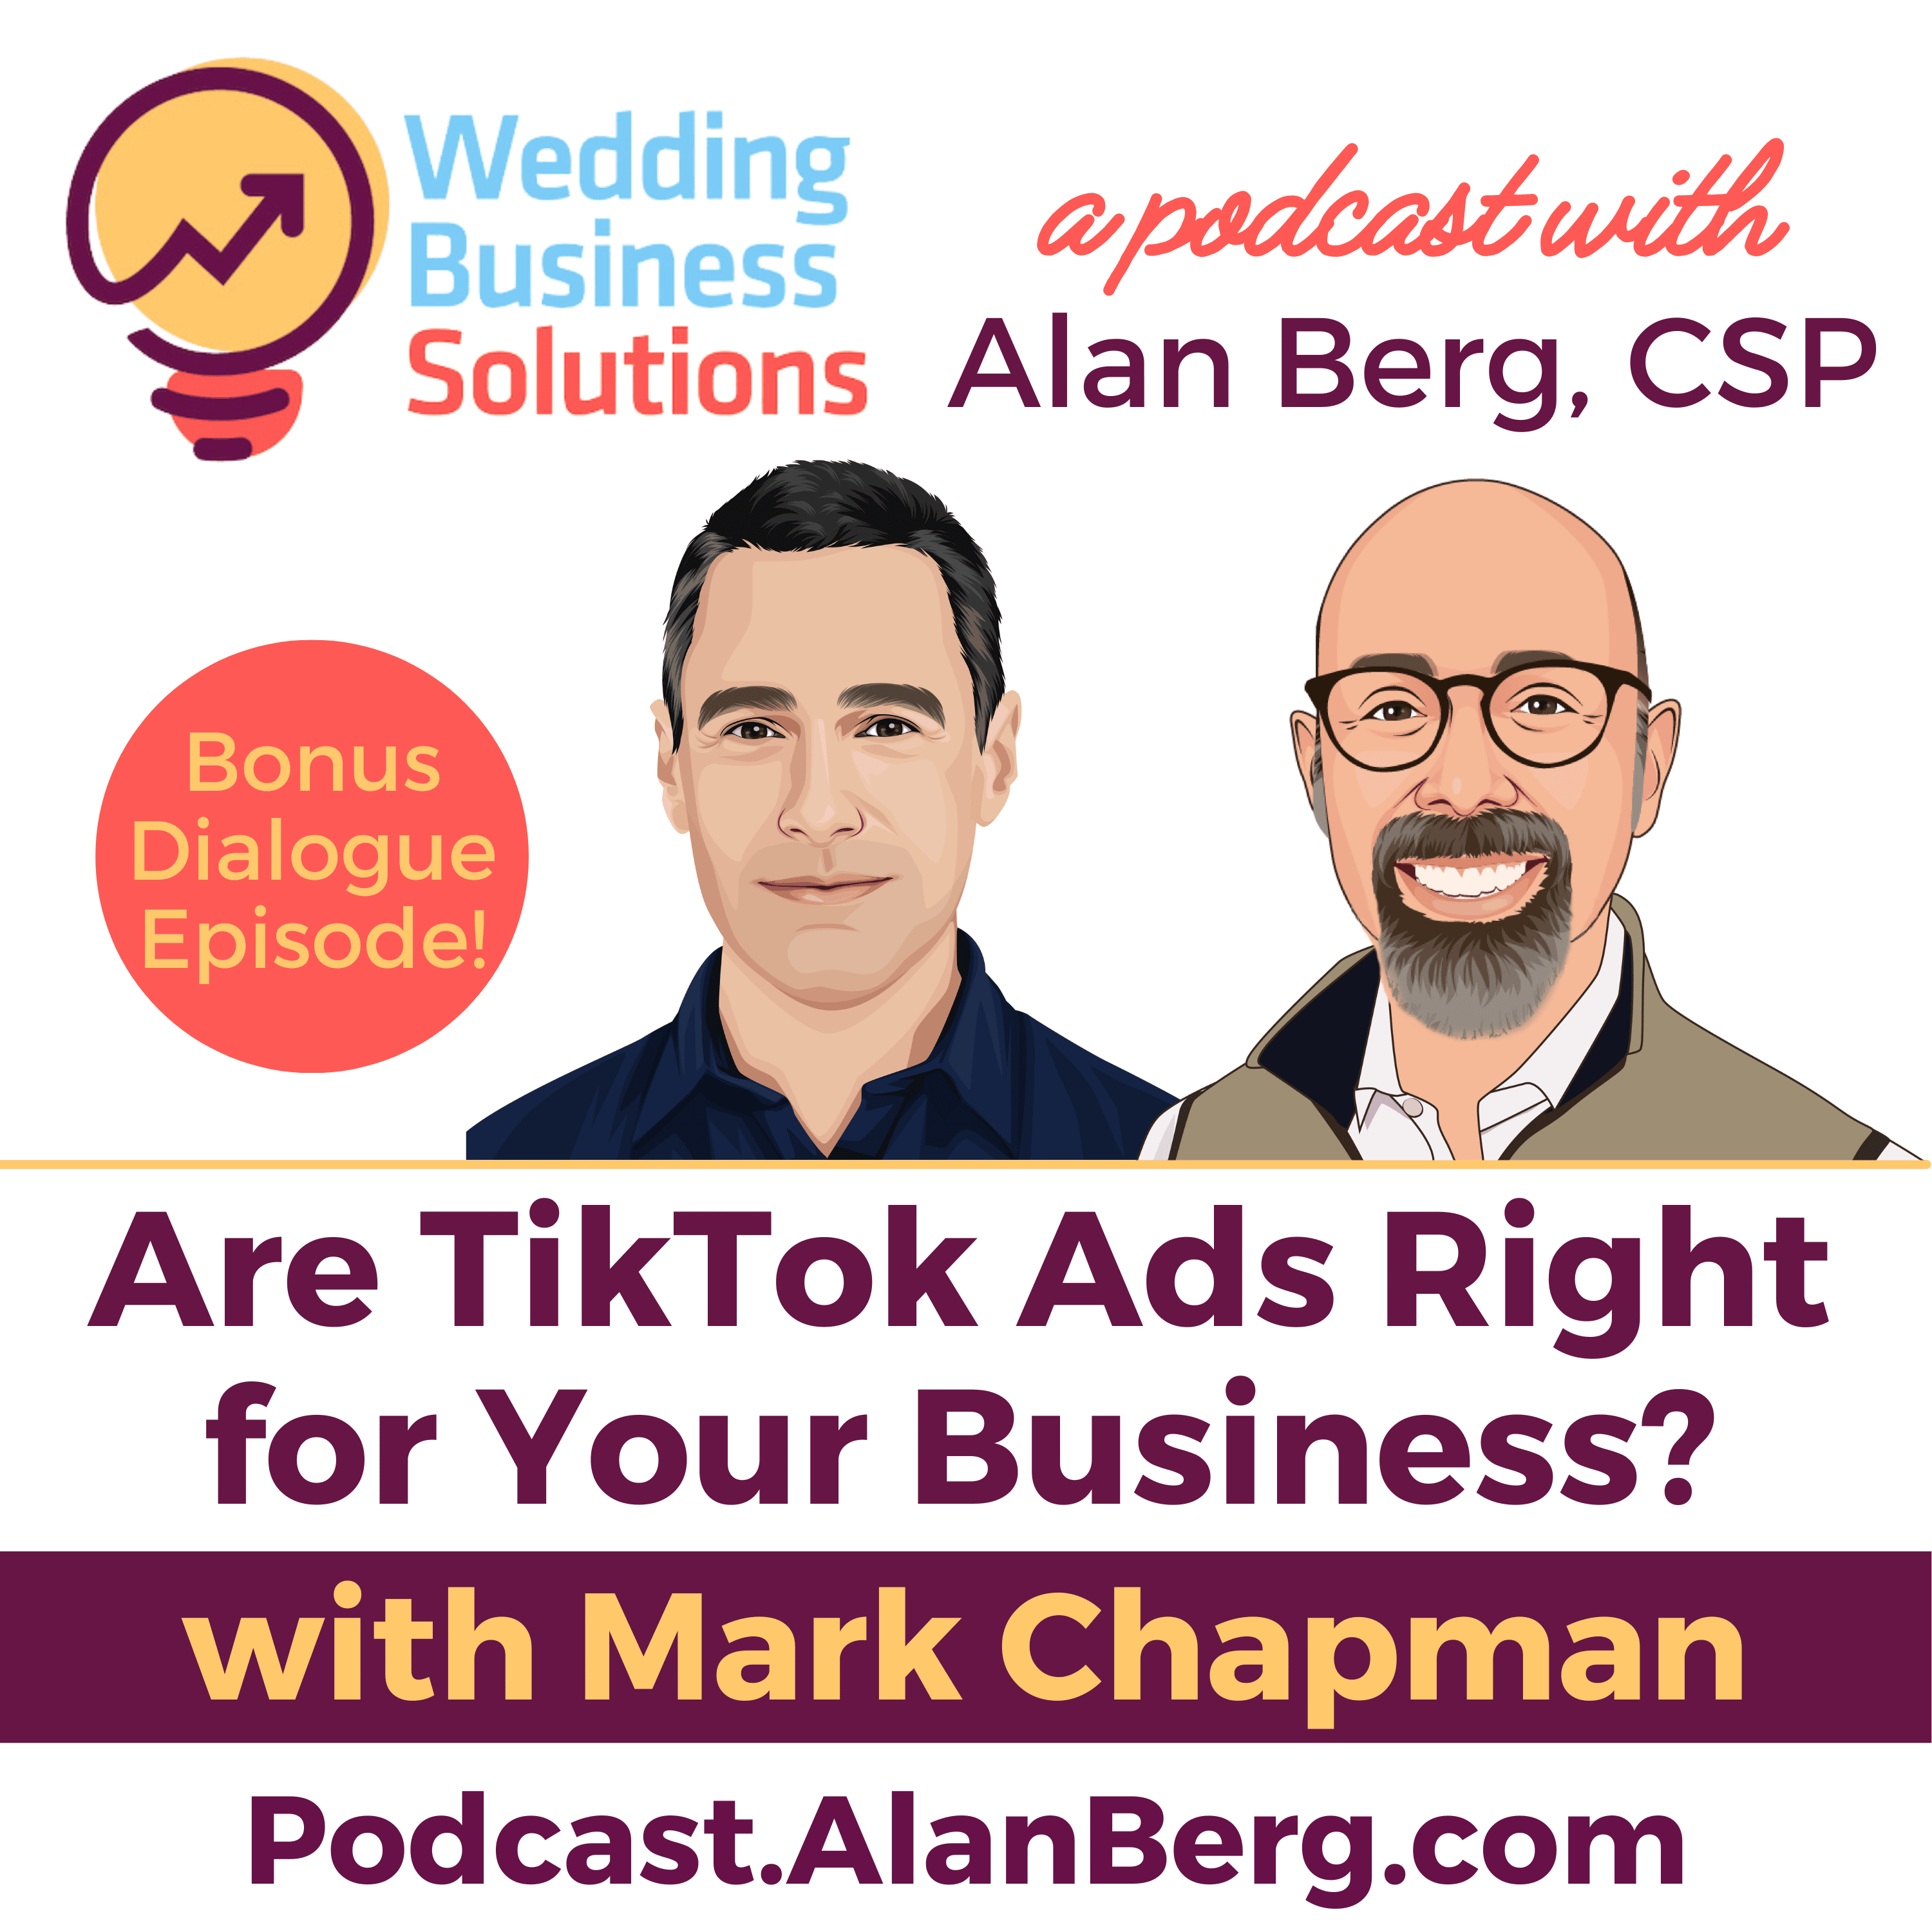 Mark Chapman TikTok Ads - Alan Berg CSP - Wedding Business Solutions